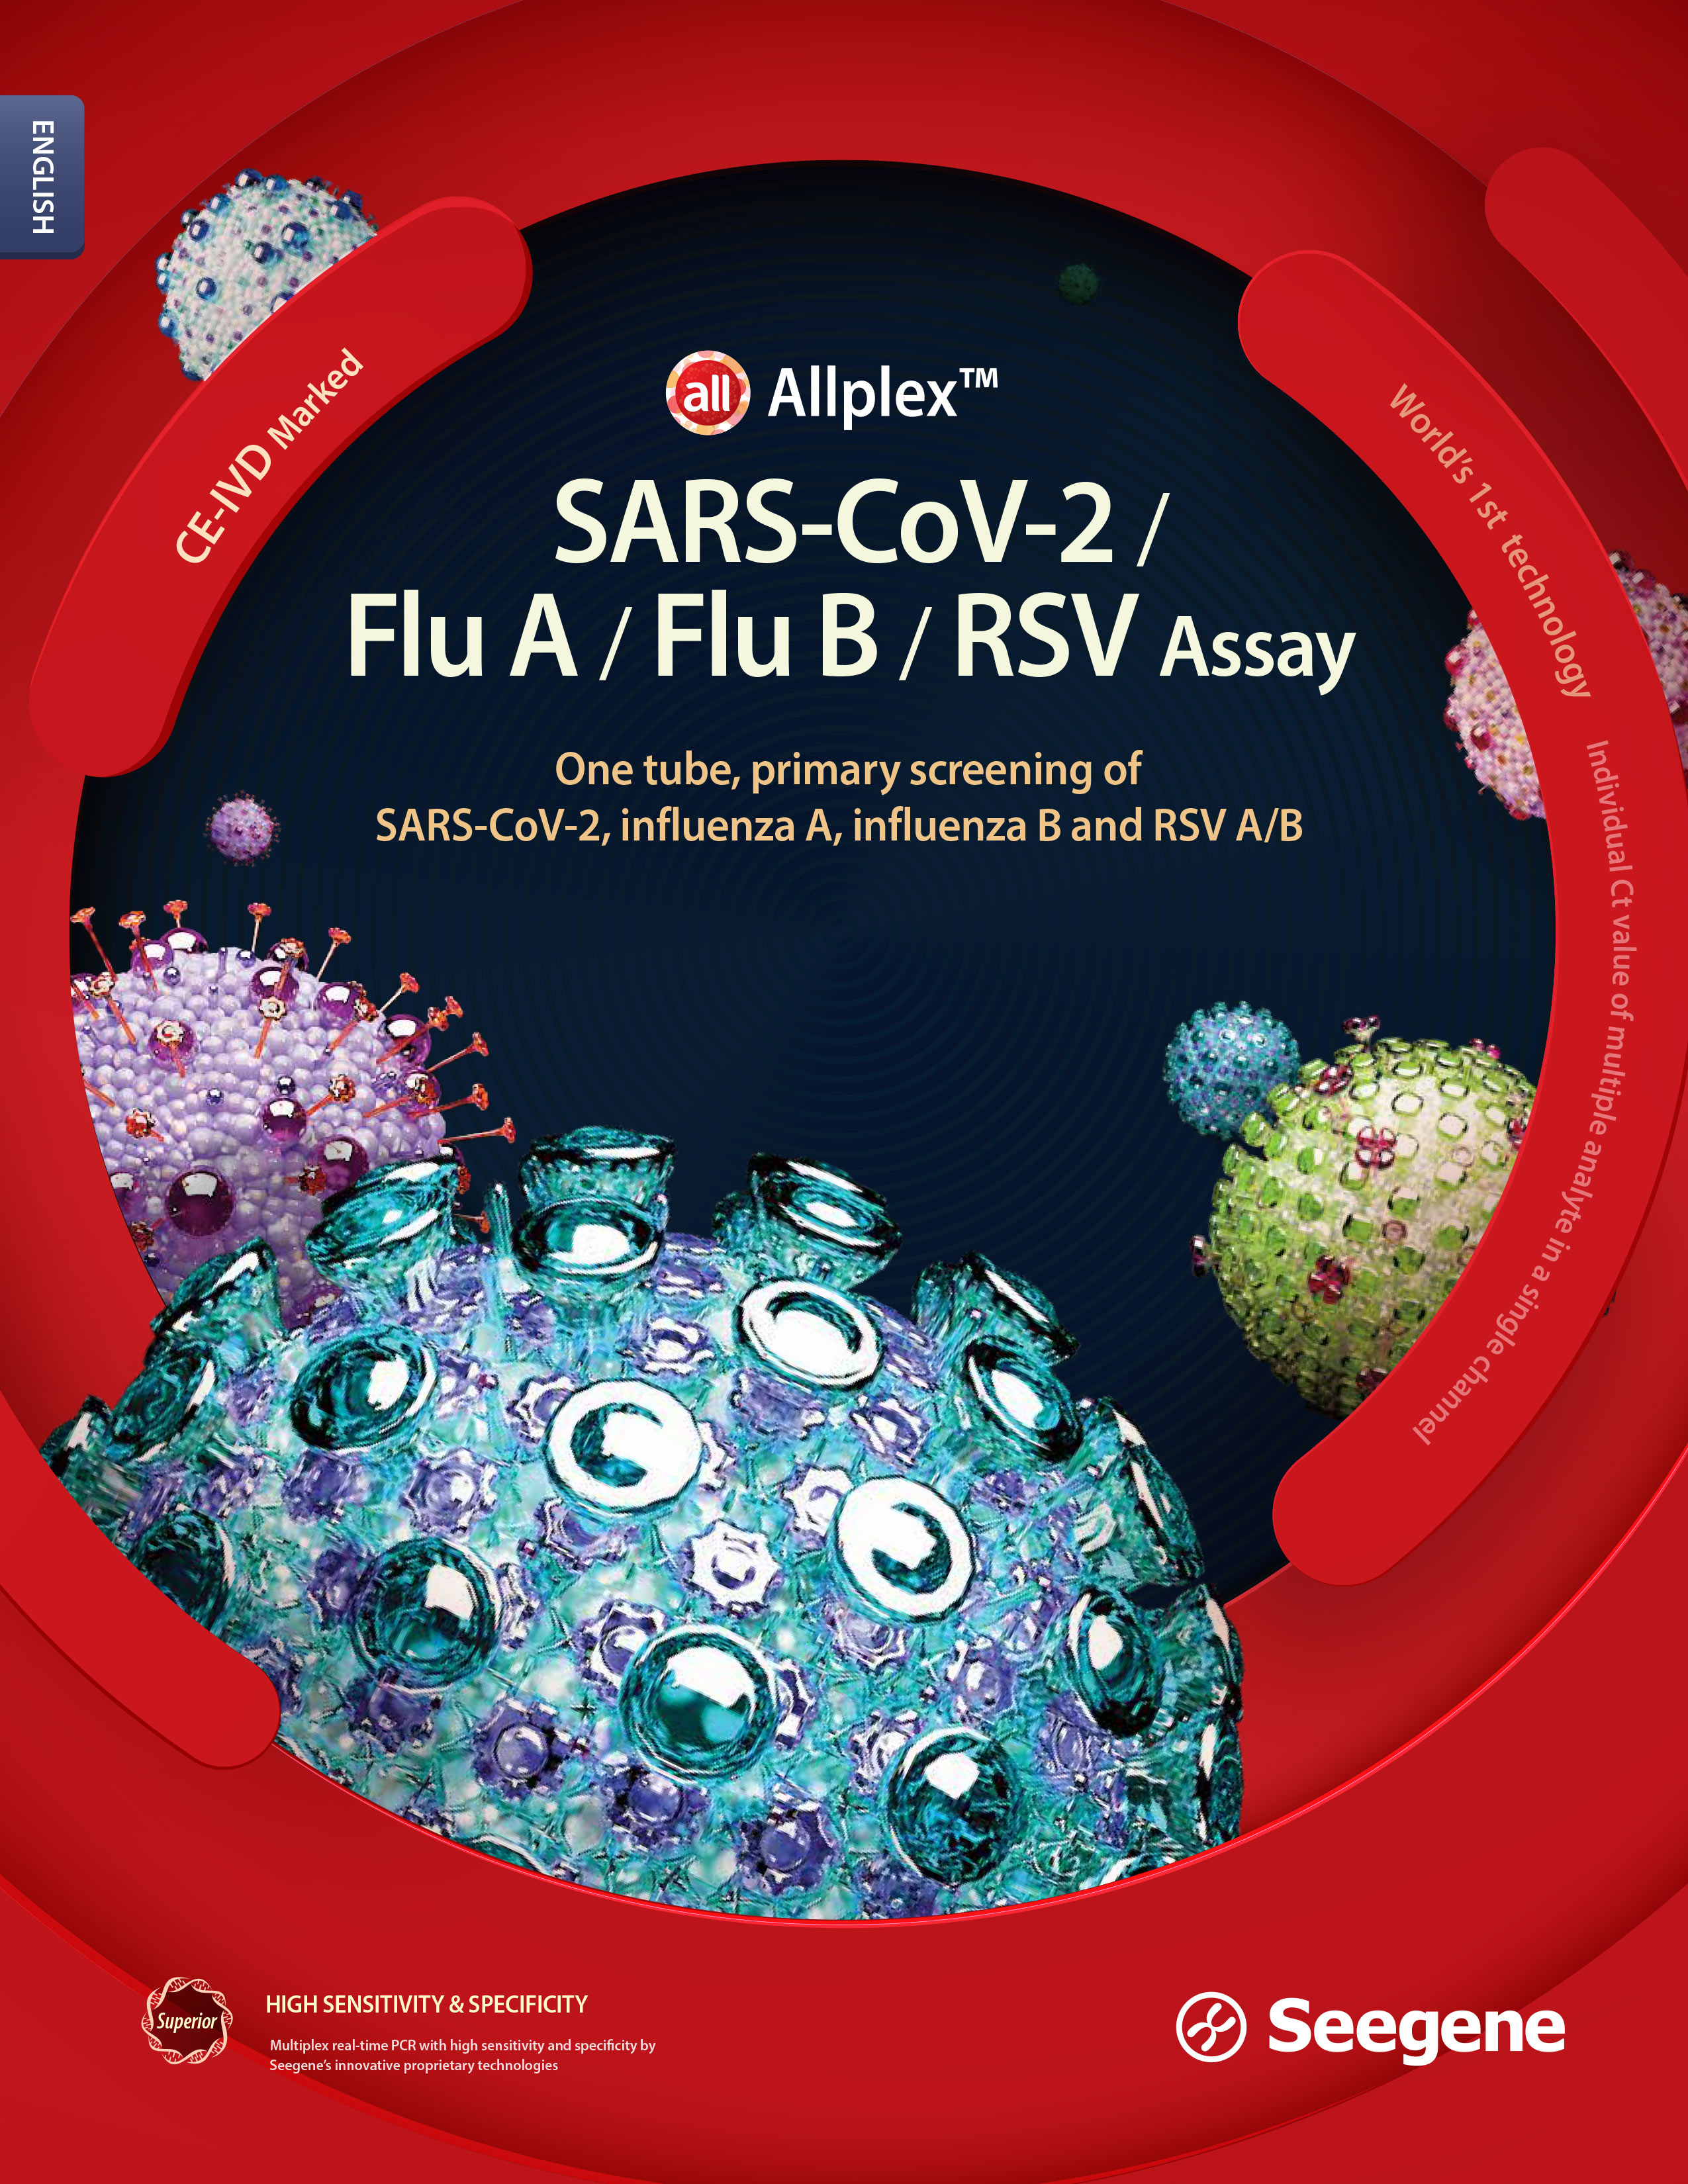 Allplex™ SARS-CoV-2/FluA/FluB/RSV Assay